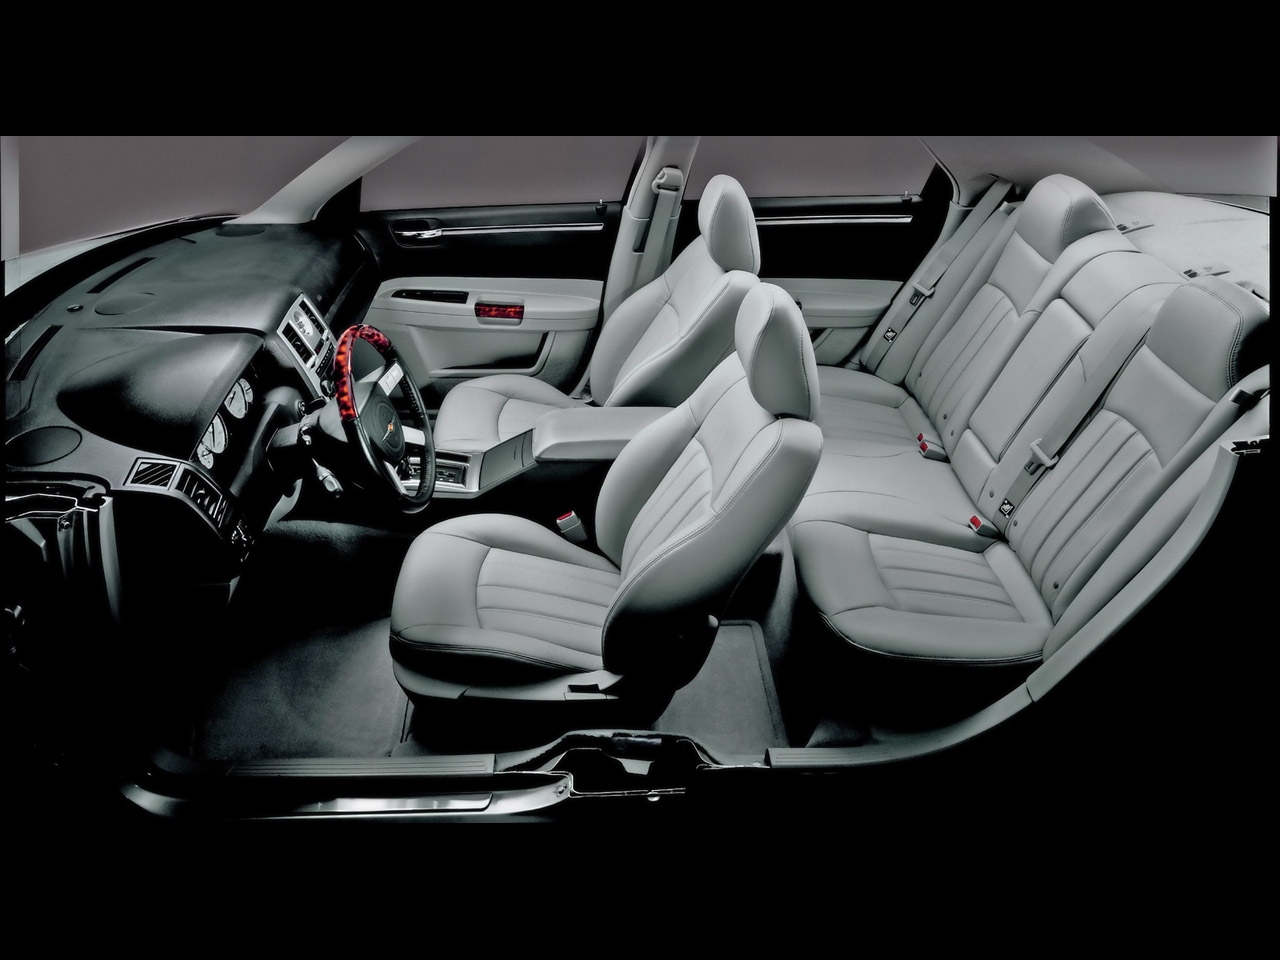 Autoexpress Chrysler 300c Interior Pics